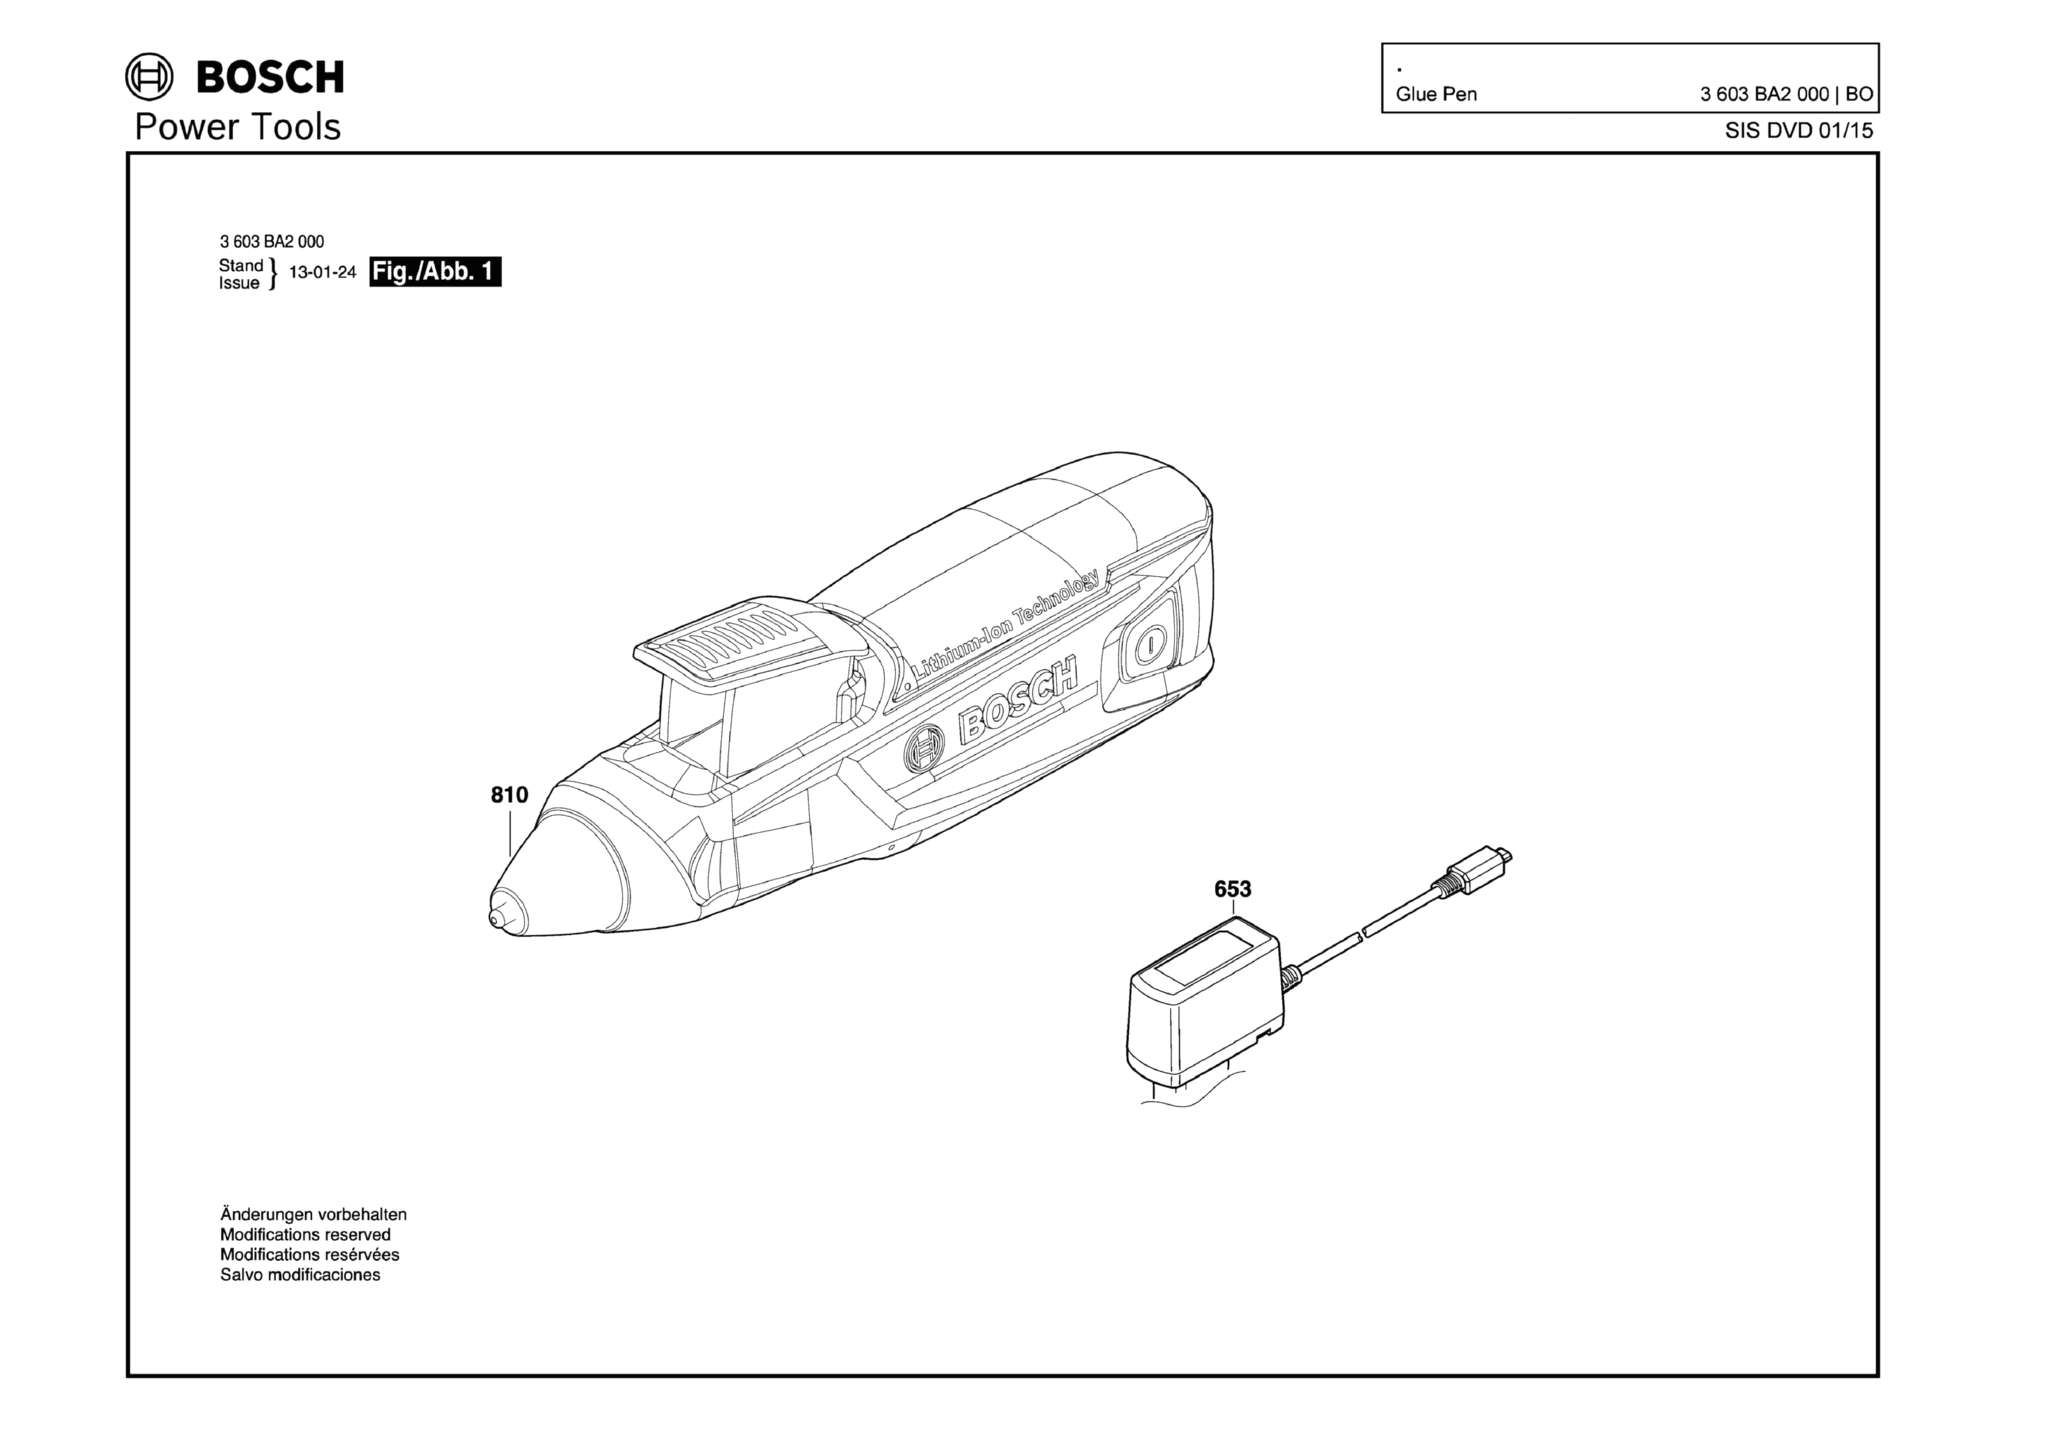 Запчасти, схема и деталировка Bosch GLUE PEN (ТИП 3603BA2000)